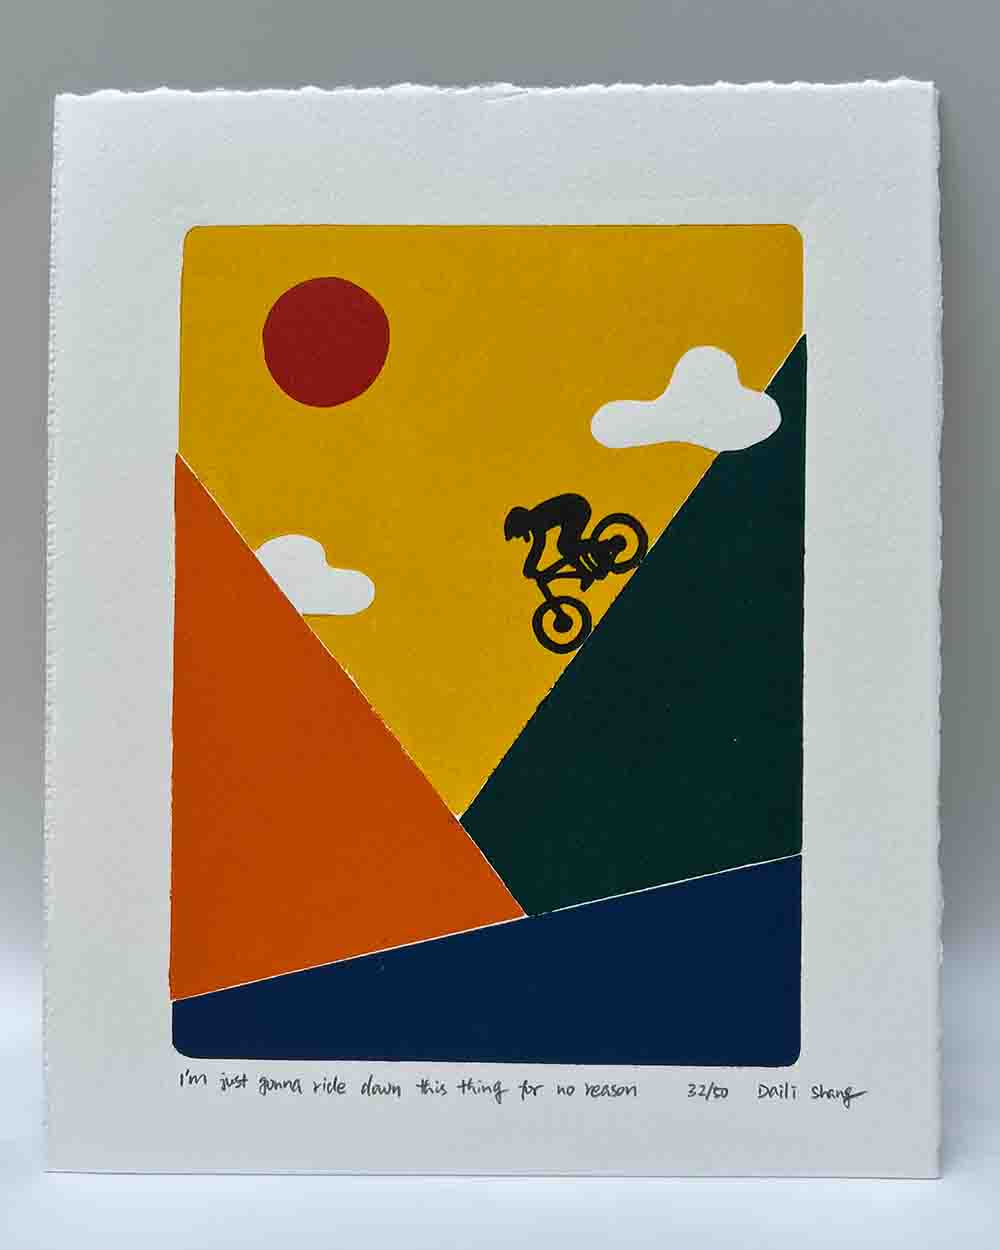 Cycling Handmade Linocut Art Print - I am just gonna ride down this thing for no reason